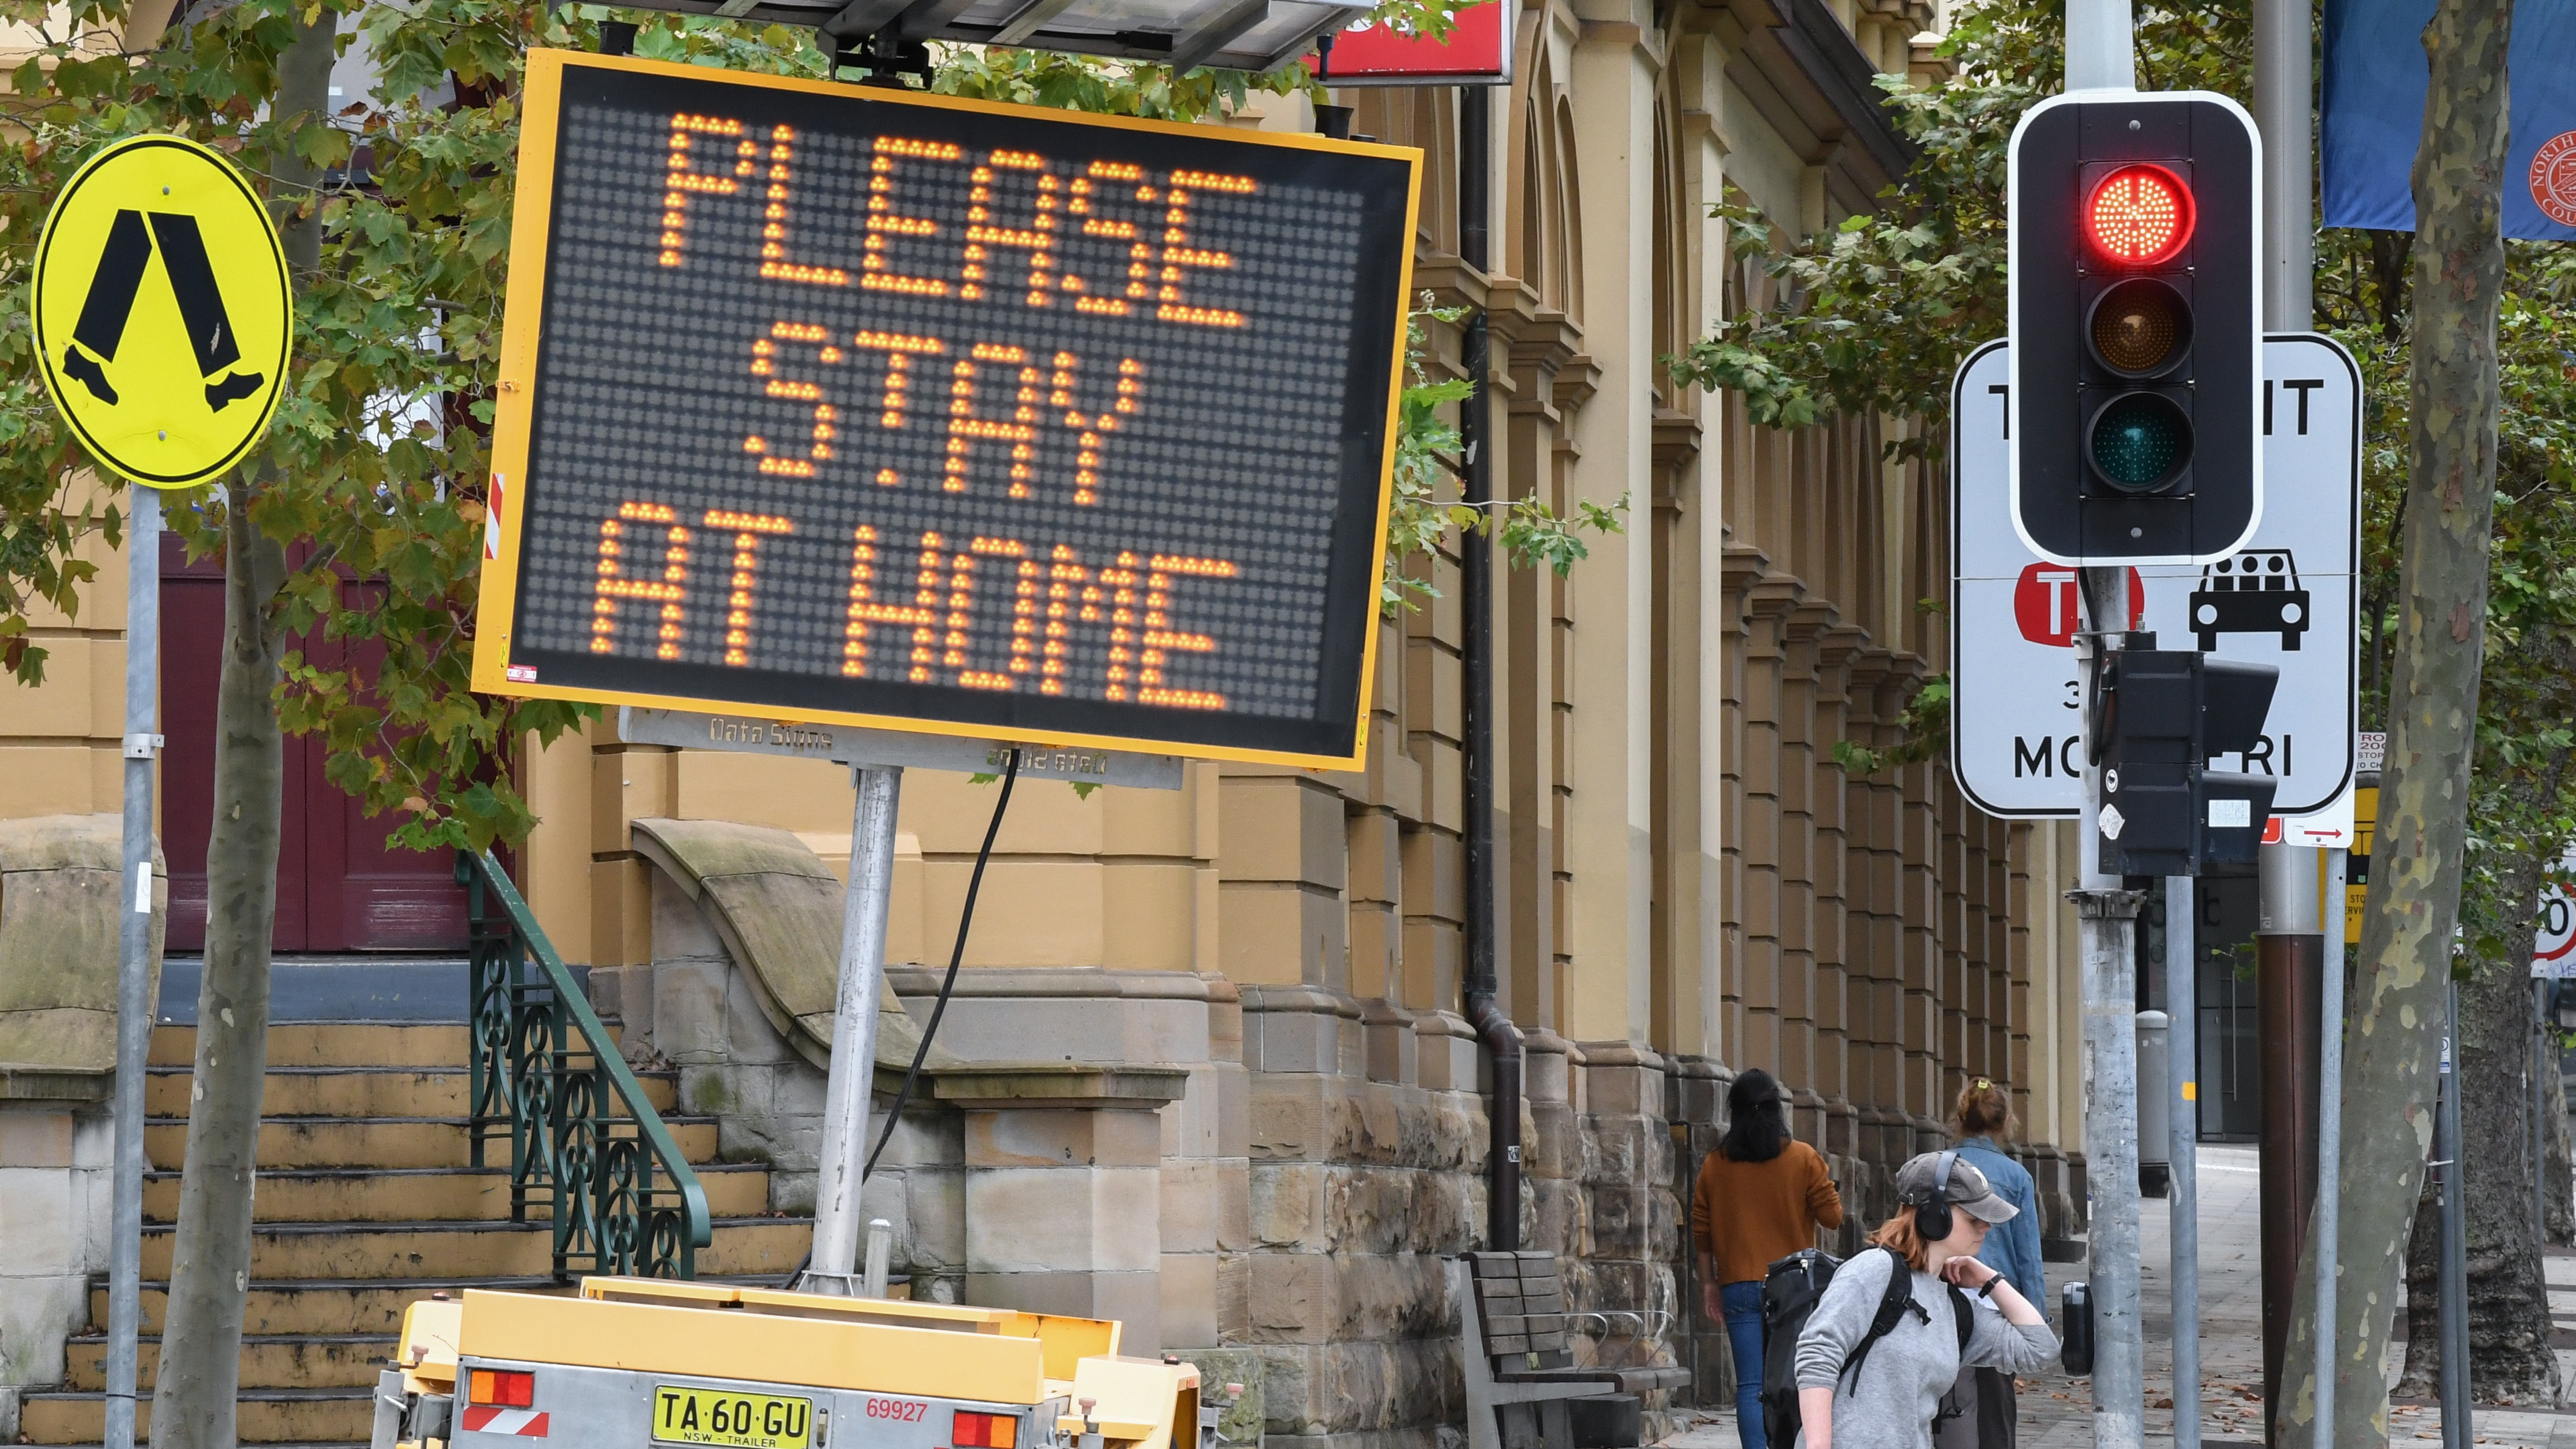 A lockdown warning sign in Tasmania, Australia